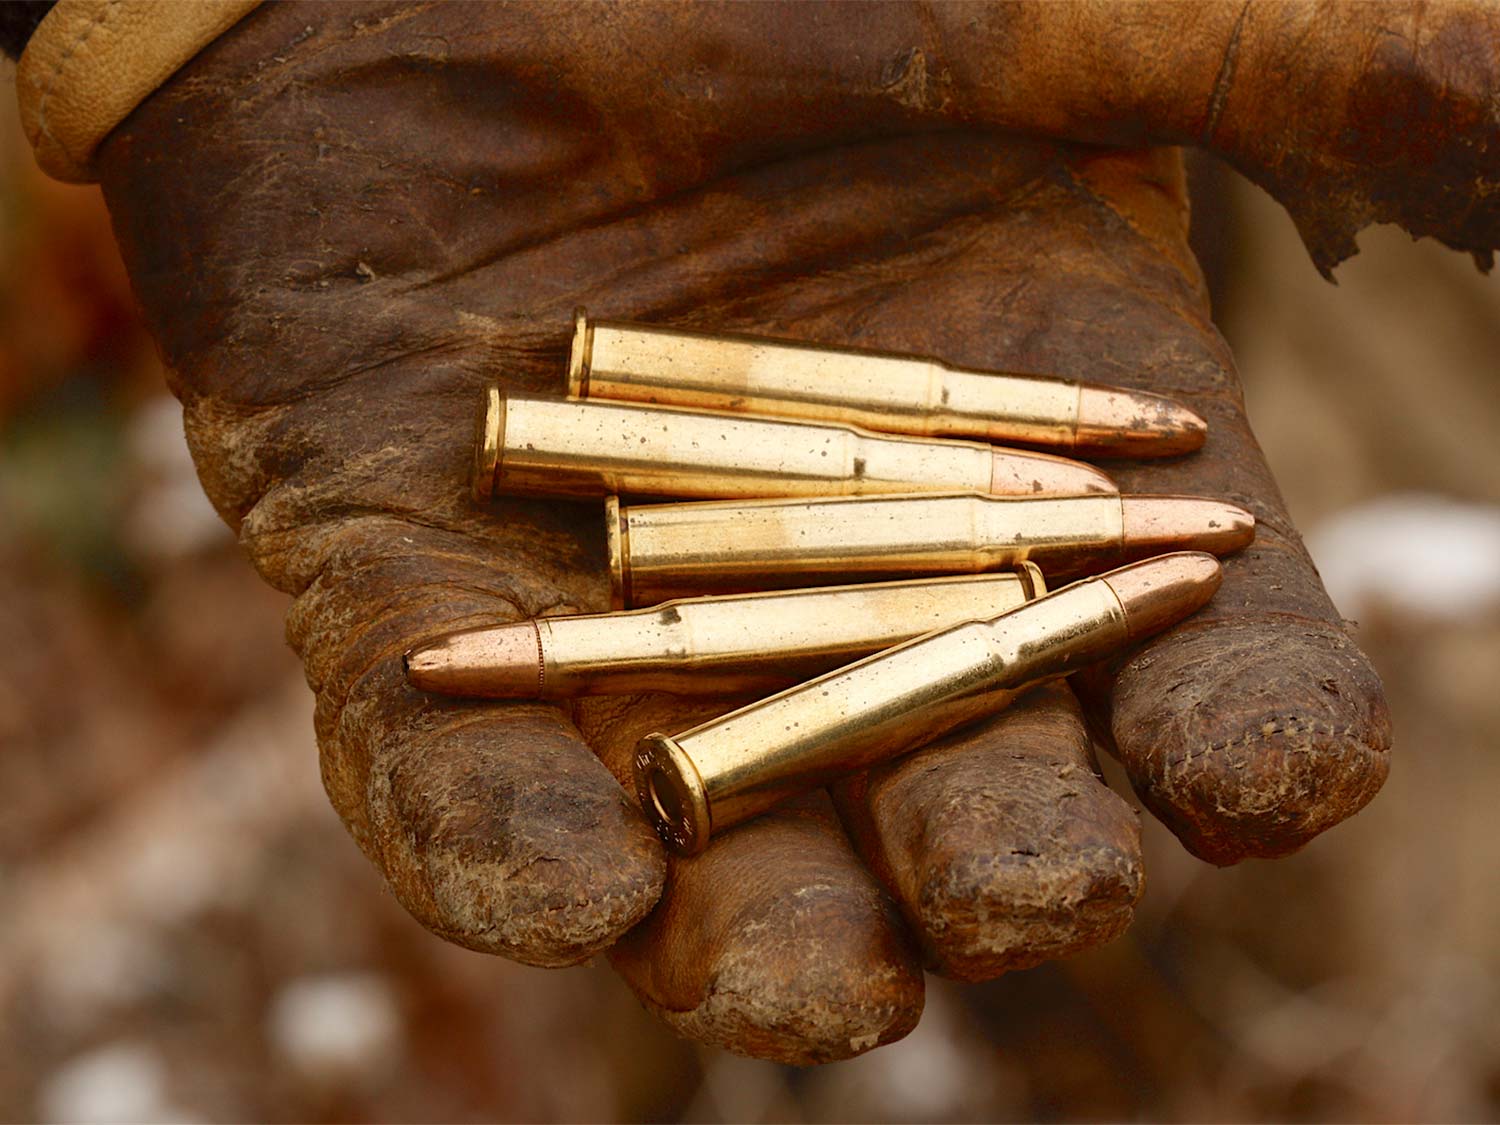 A handful of rifle ammo.